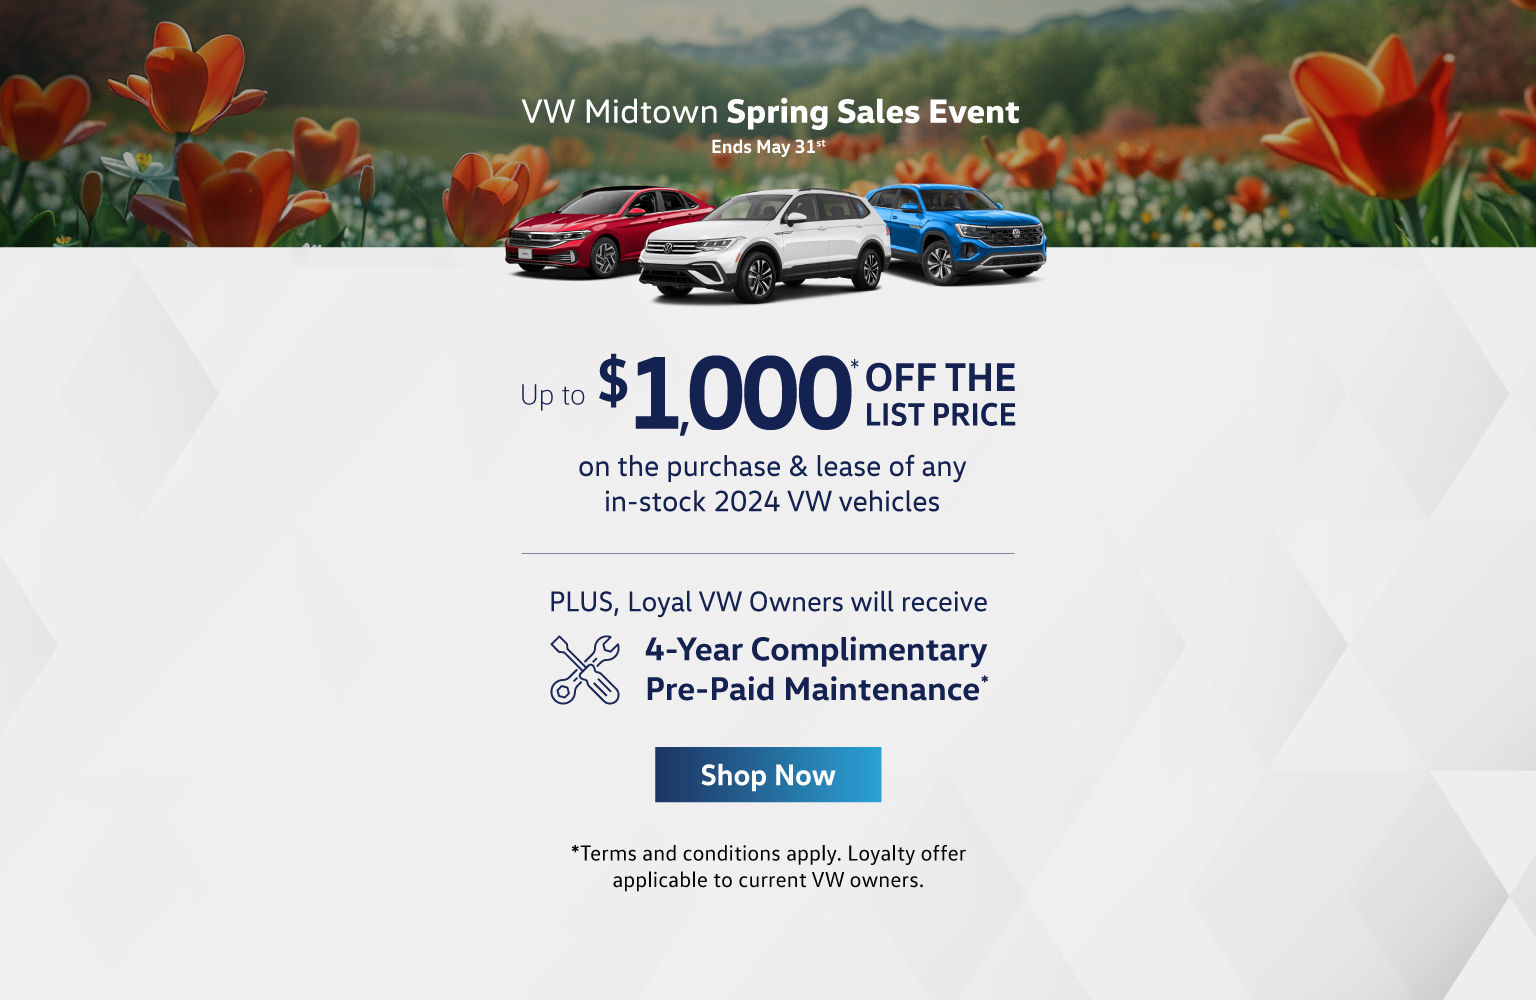 Spring Sales Event - VW MidTown